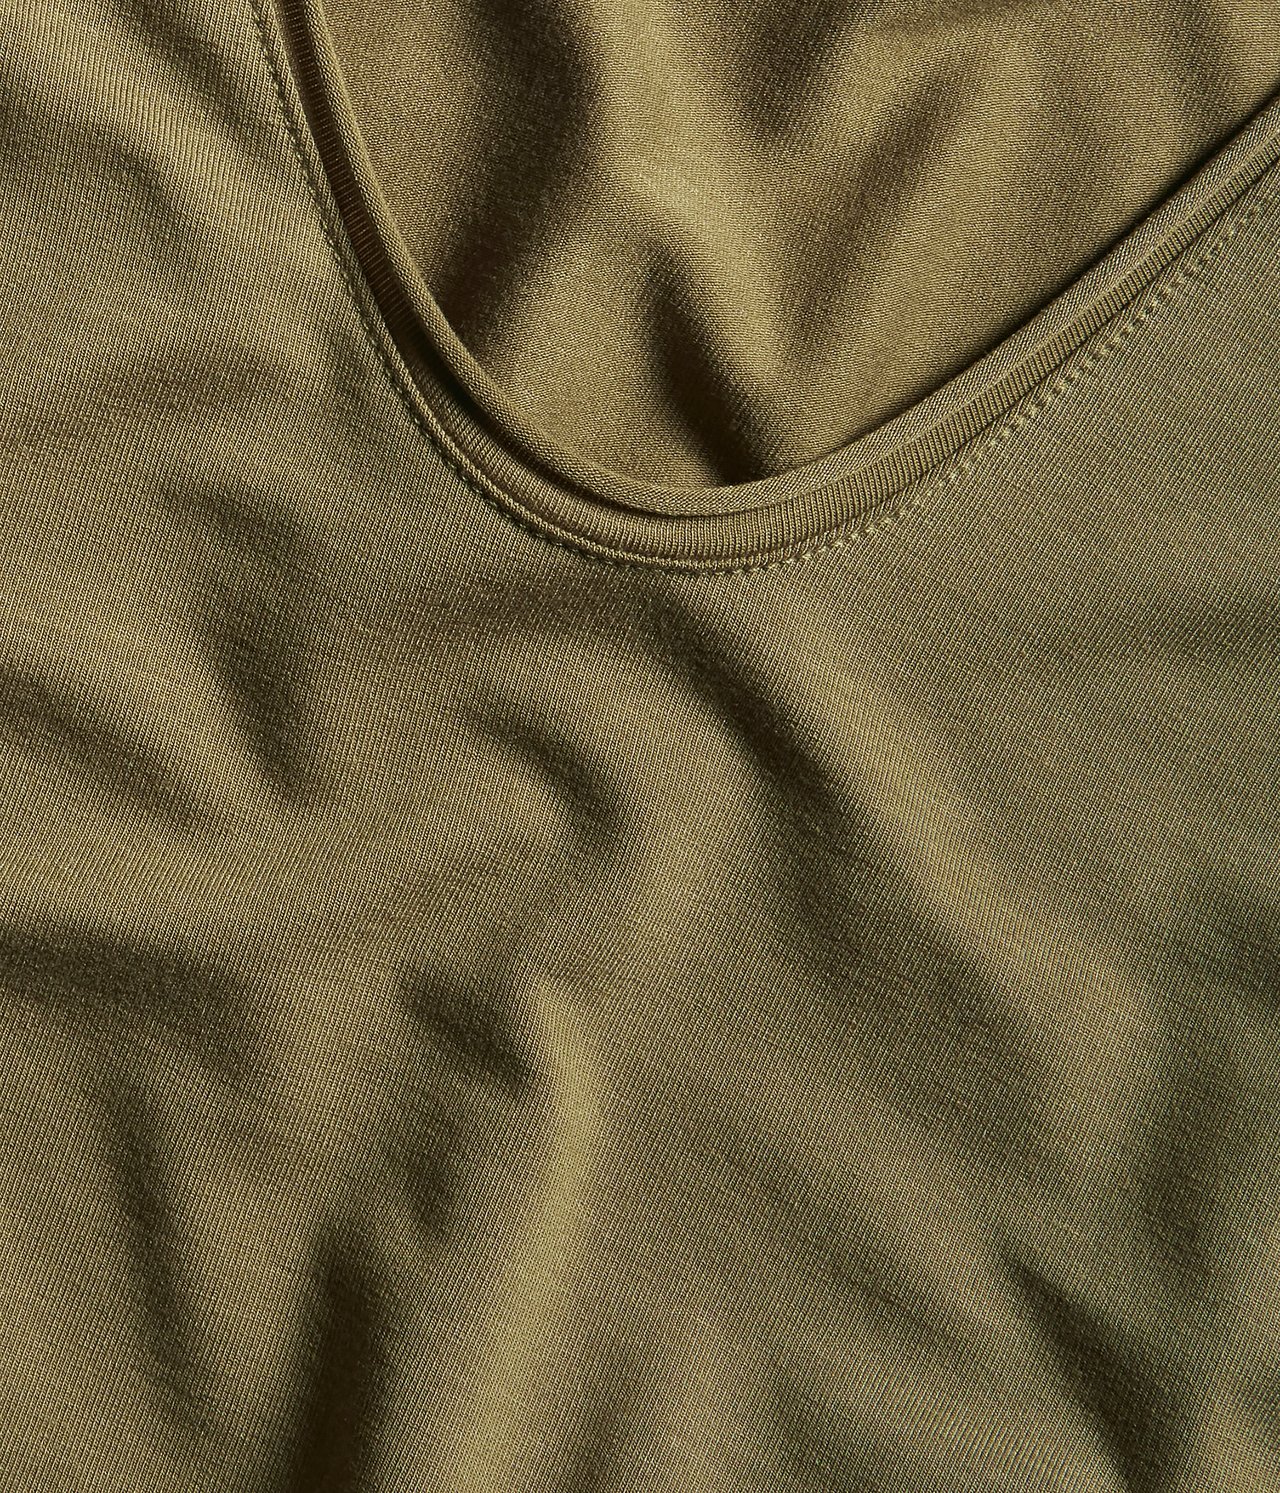 Koszulka z dwustronnym dekoltem - Zielony - 5